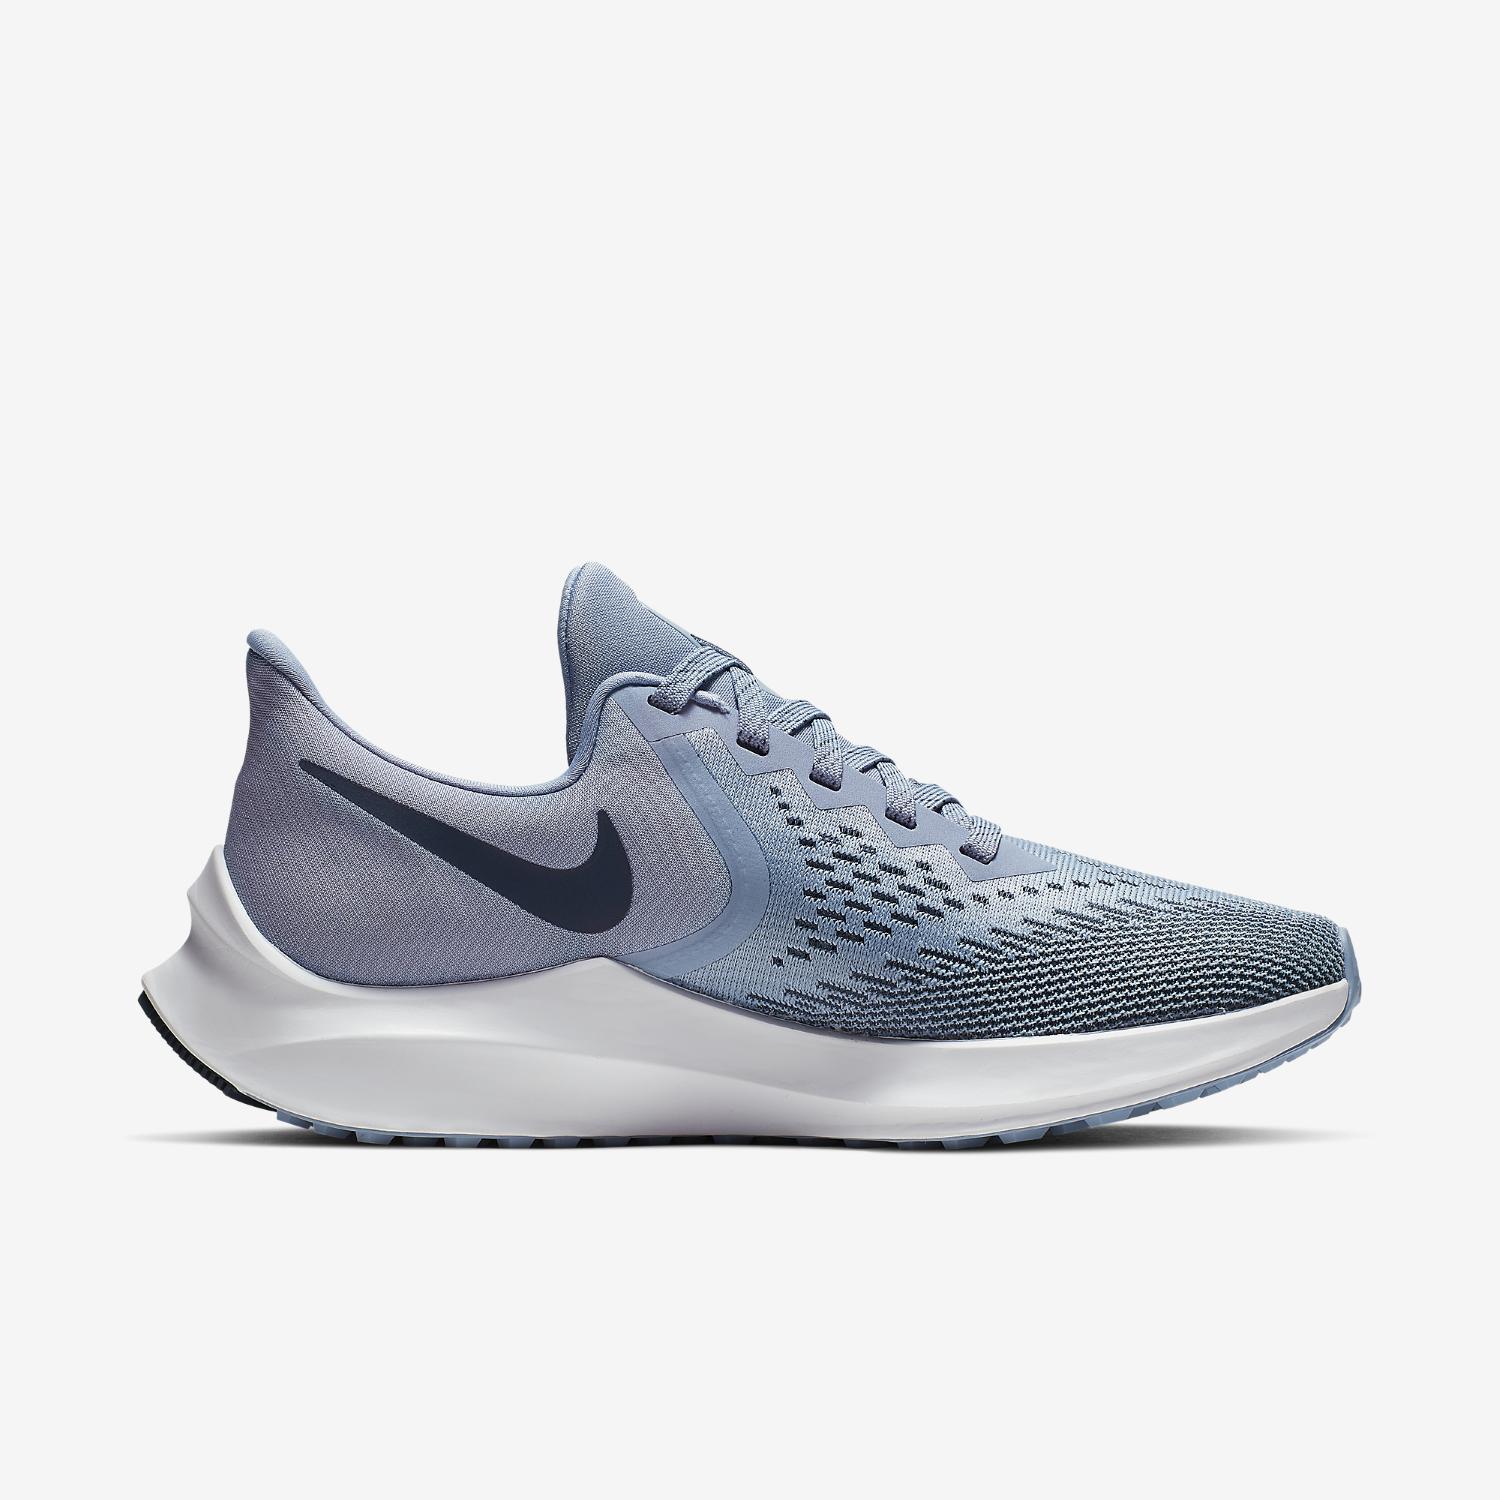 Nike Air Zoom Winflo 6 Running Shoe in Blue - Lyst